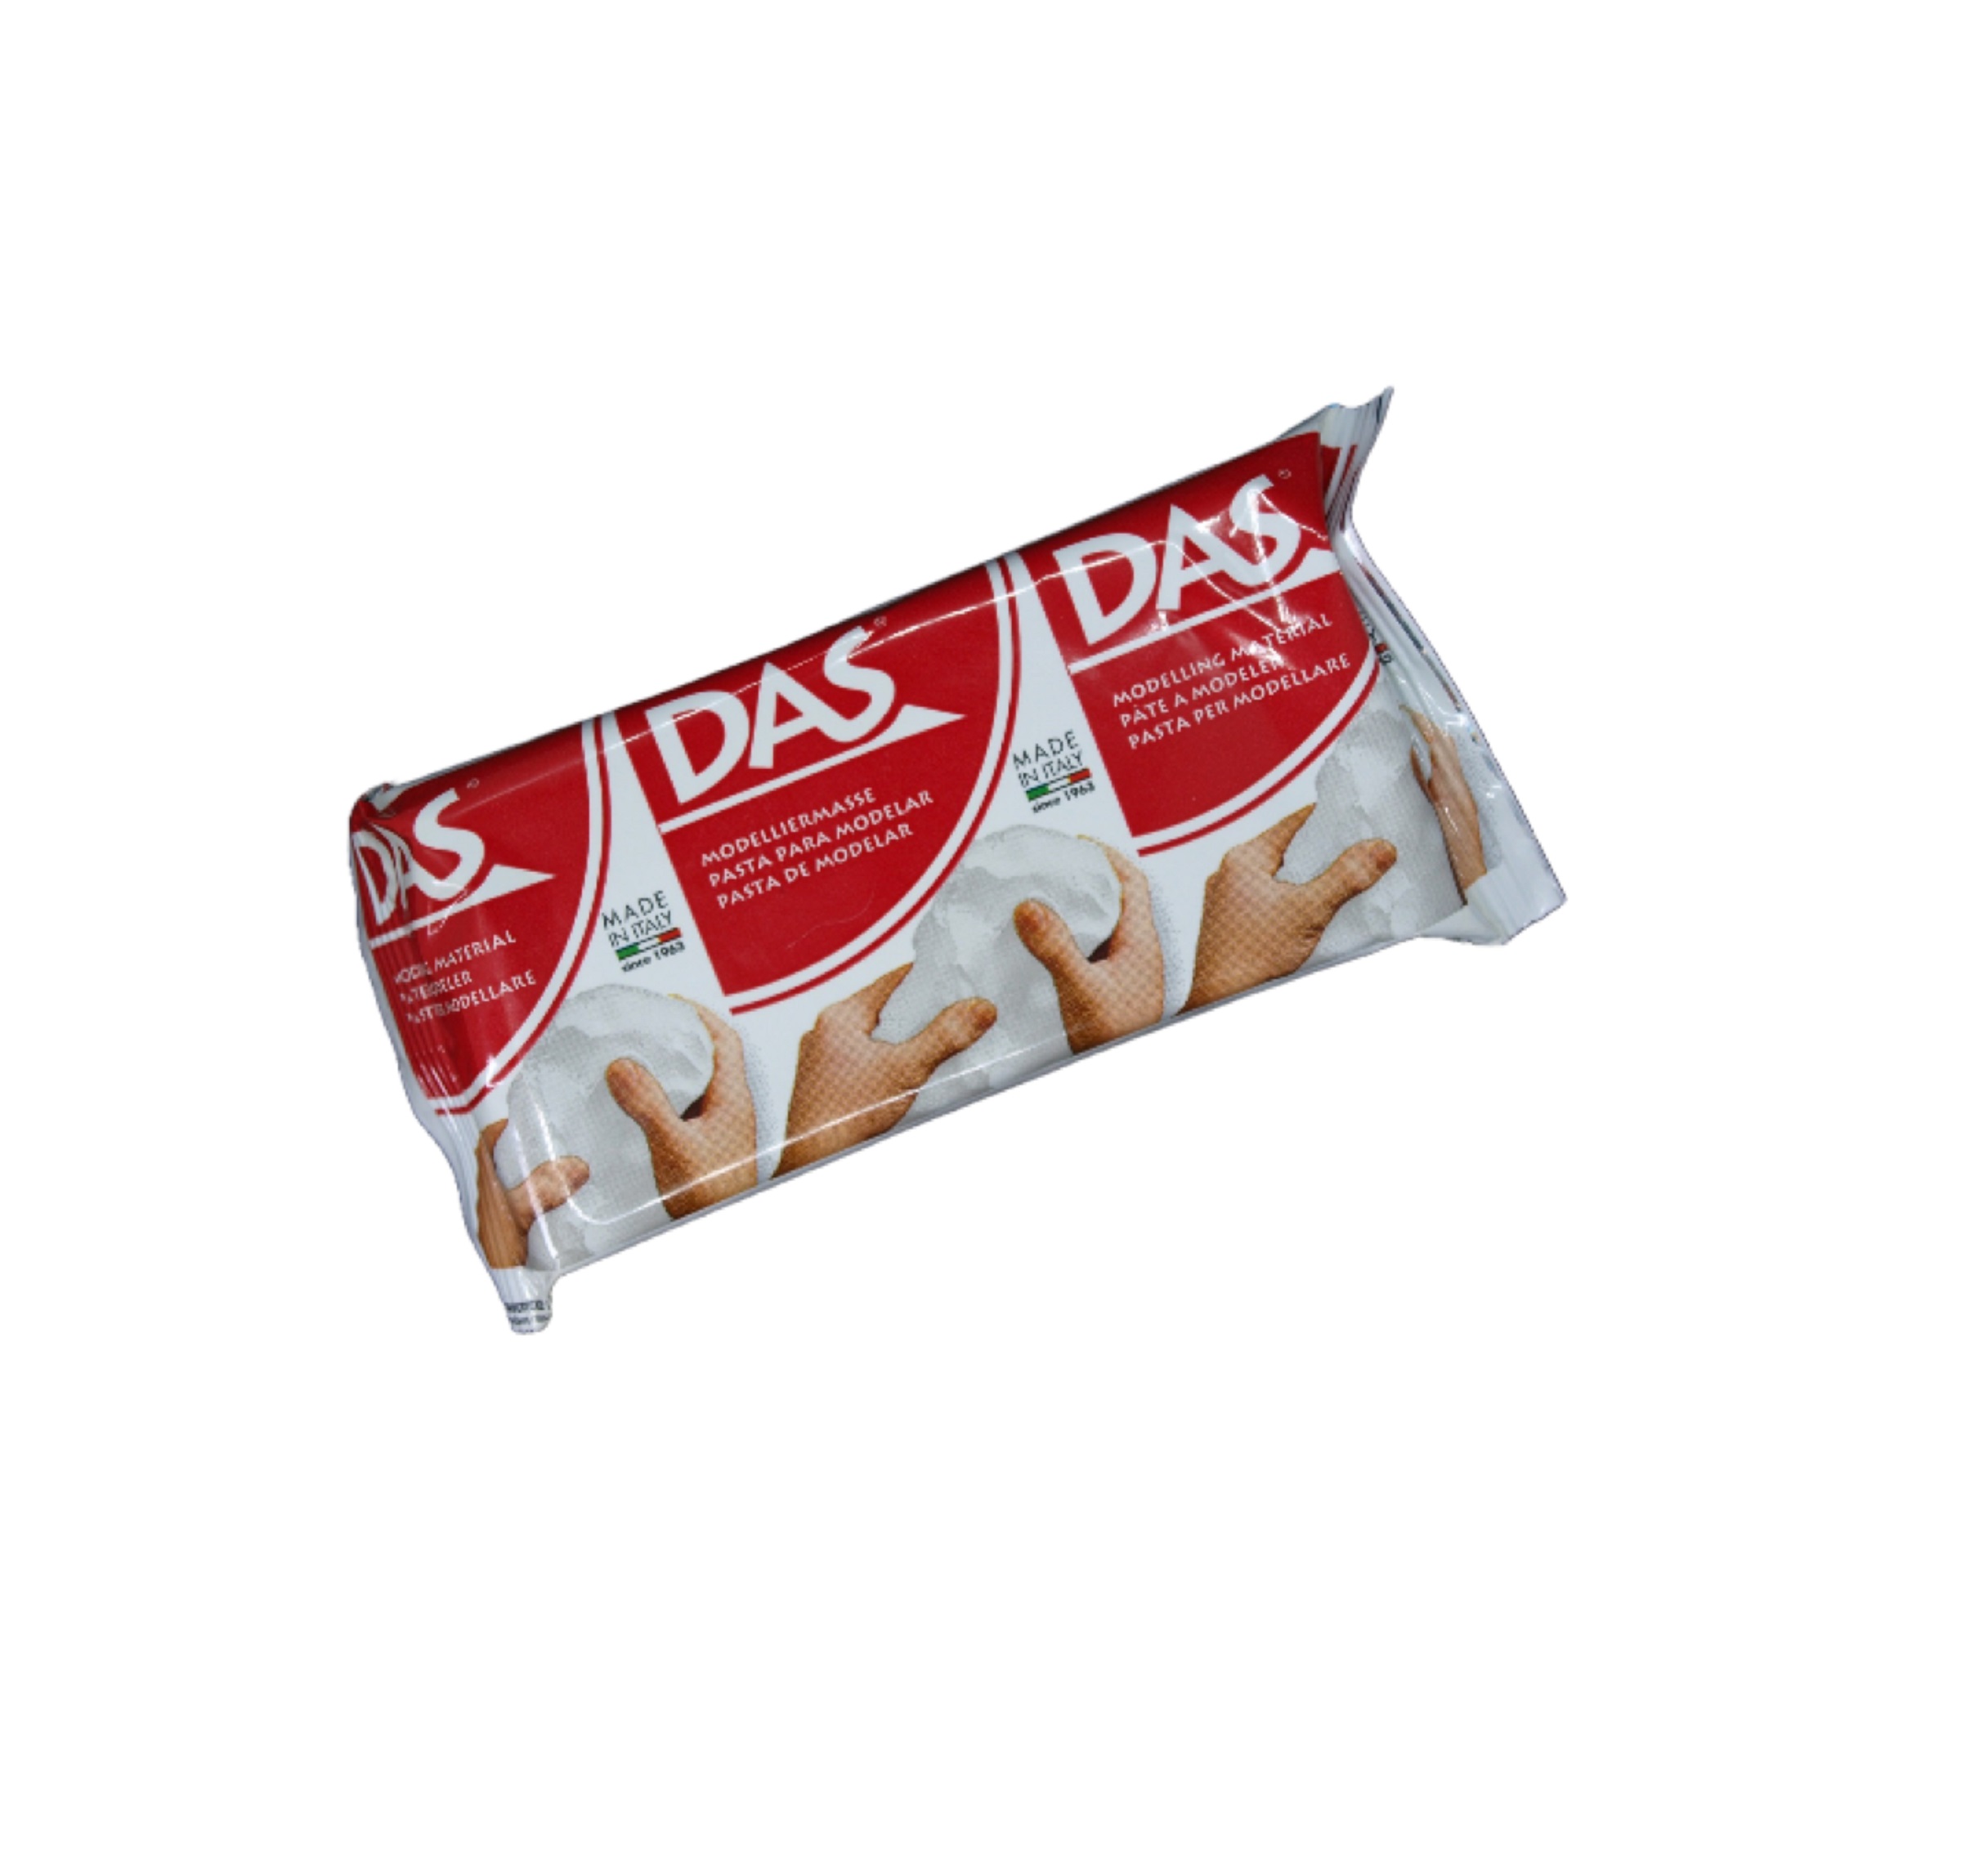 DAS Air Dry Modeling Clay 1.1lb Pronto White